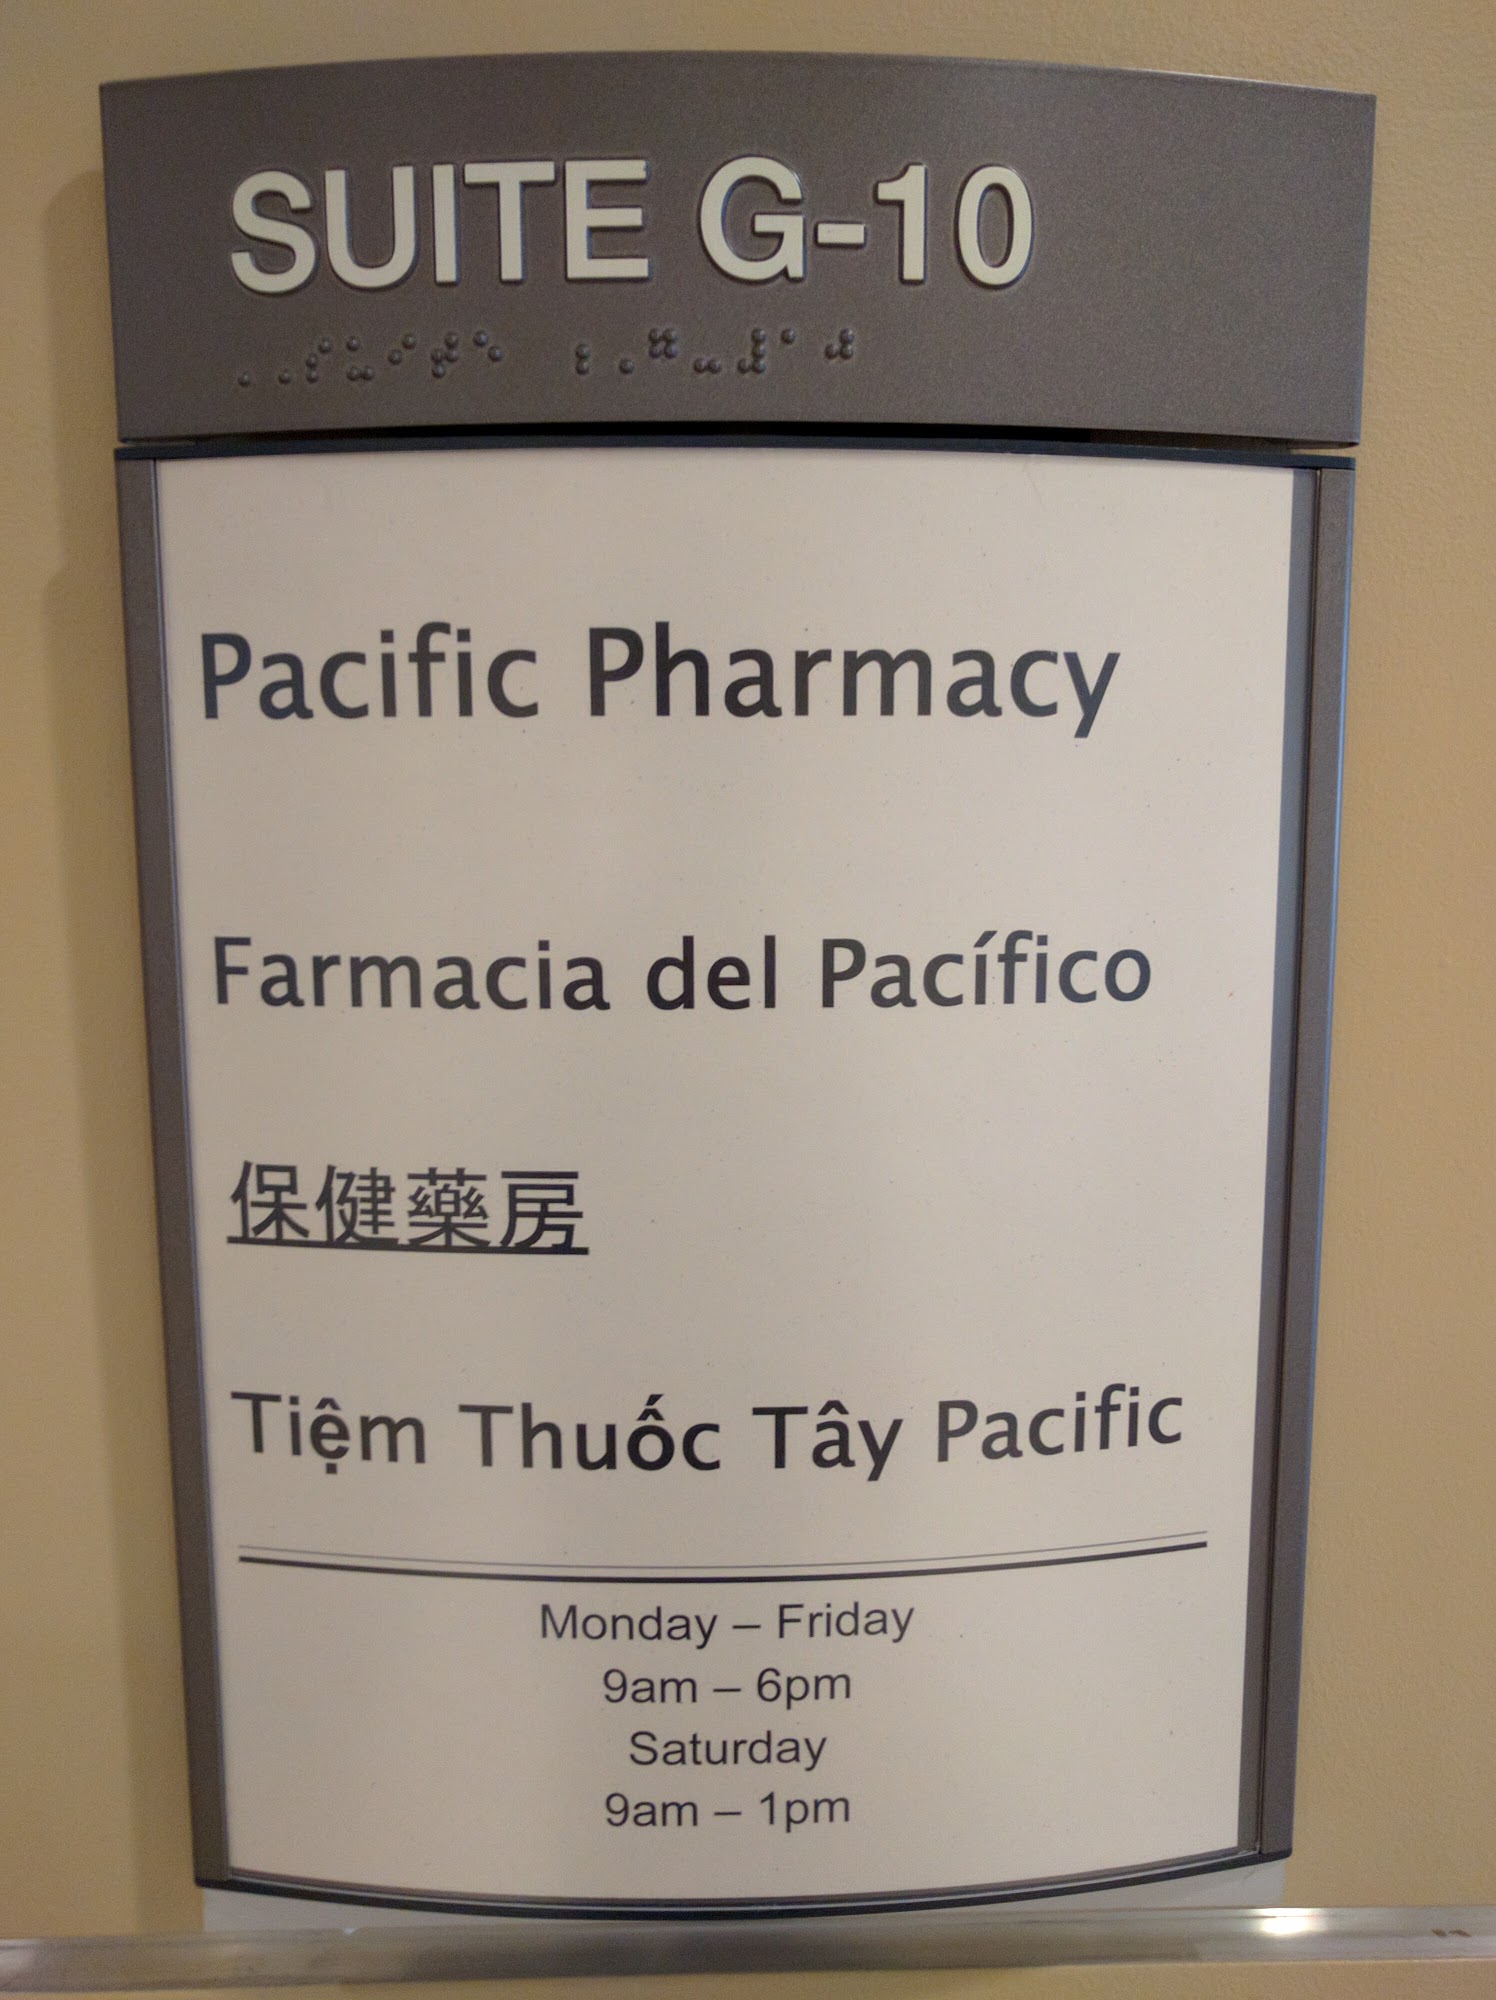 Pacific Pharmacy